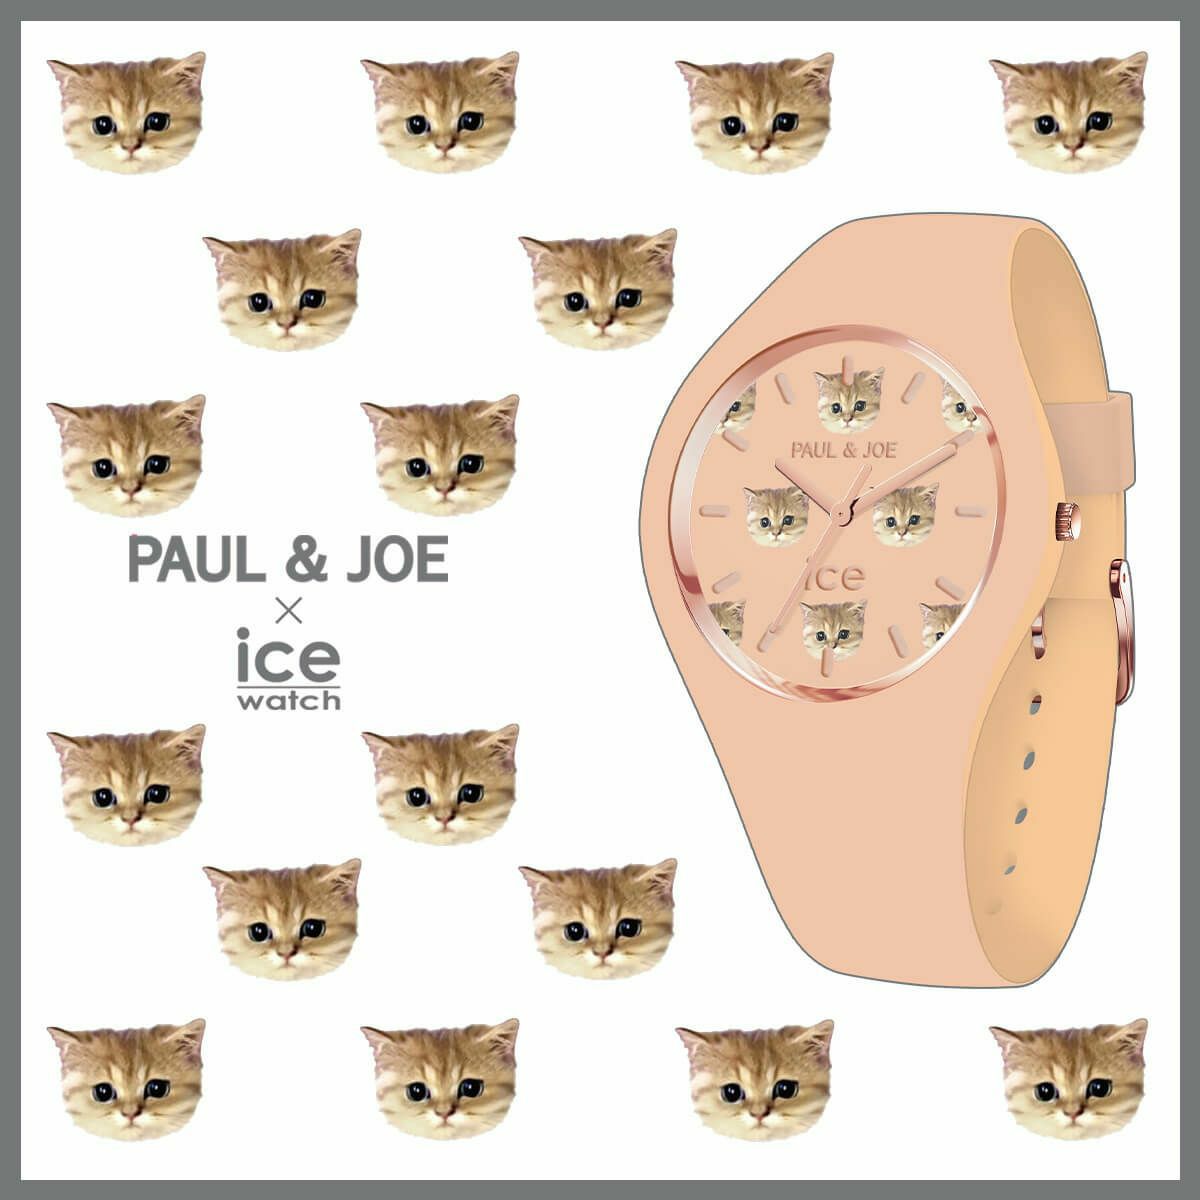 PAUL & JOE × ICE-WATCH - ポール & ジョー ヌネット - アプリコット